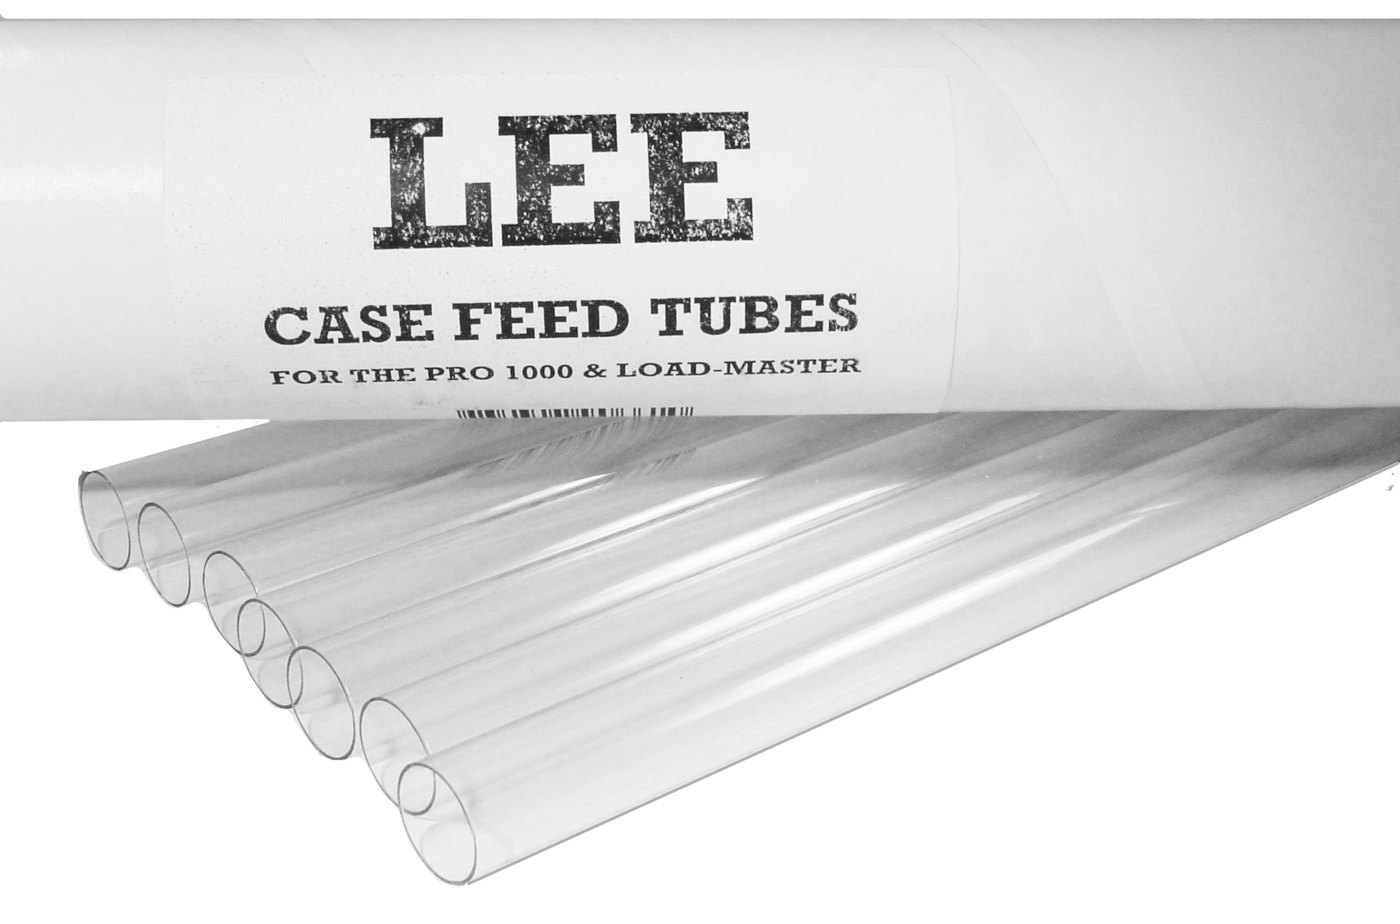 Lee Lee X-feeder Tubes - For Pro 1000 7 Pack Reloading Tools